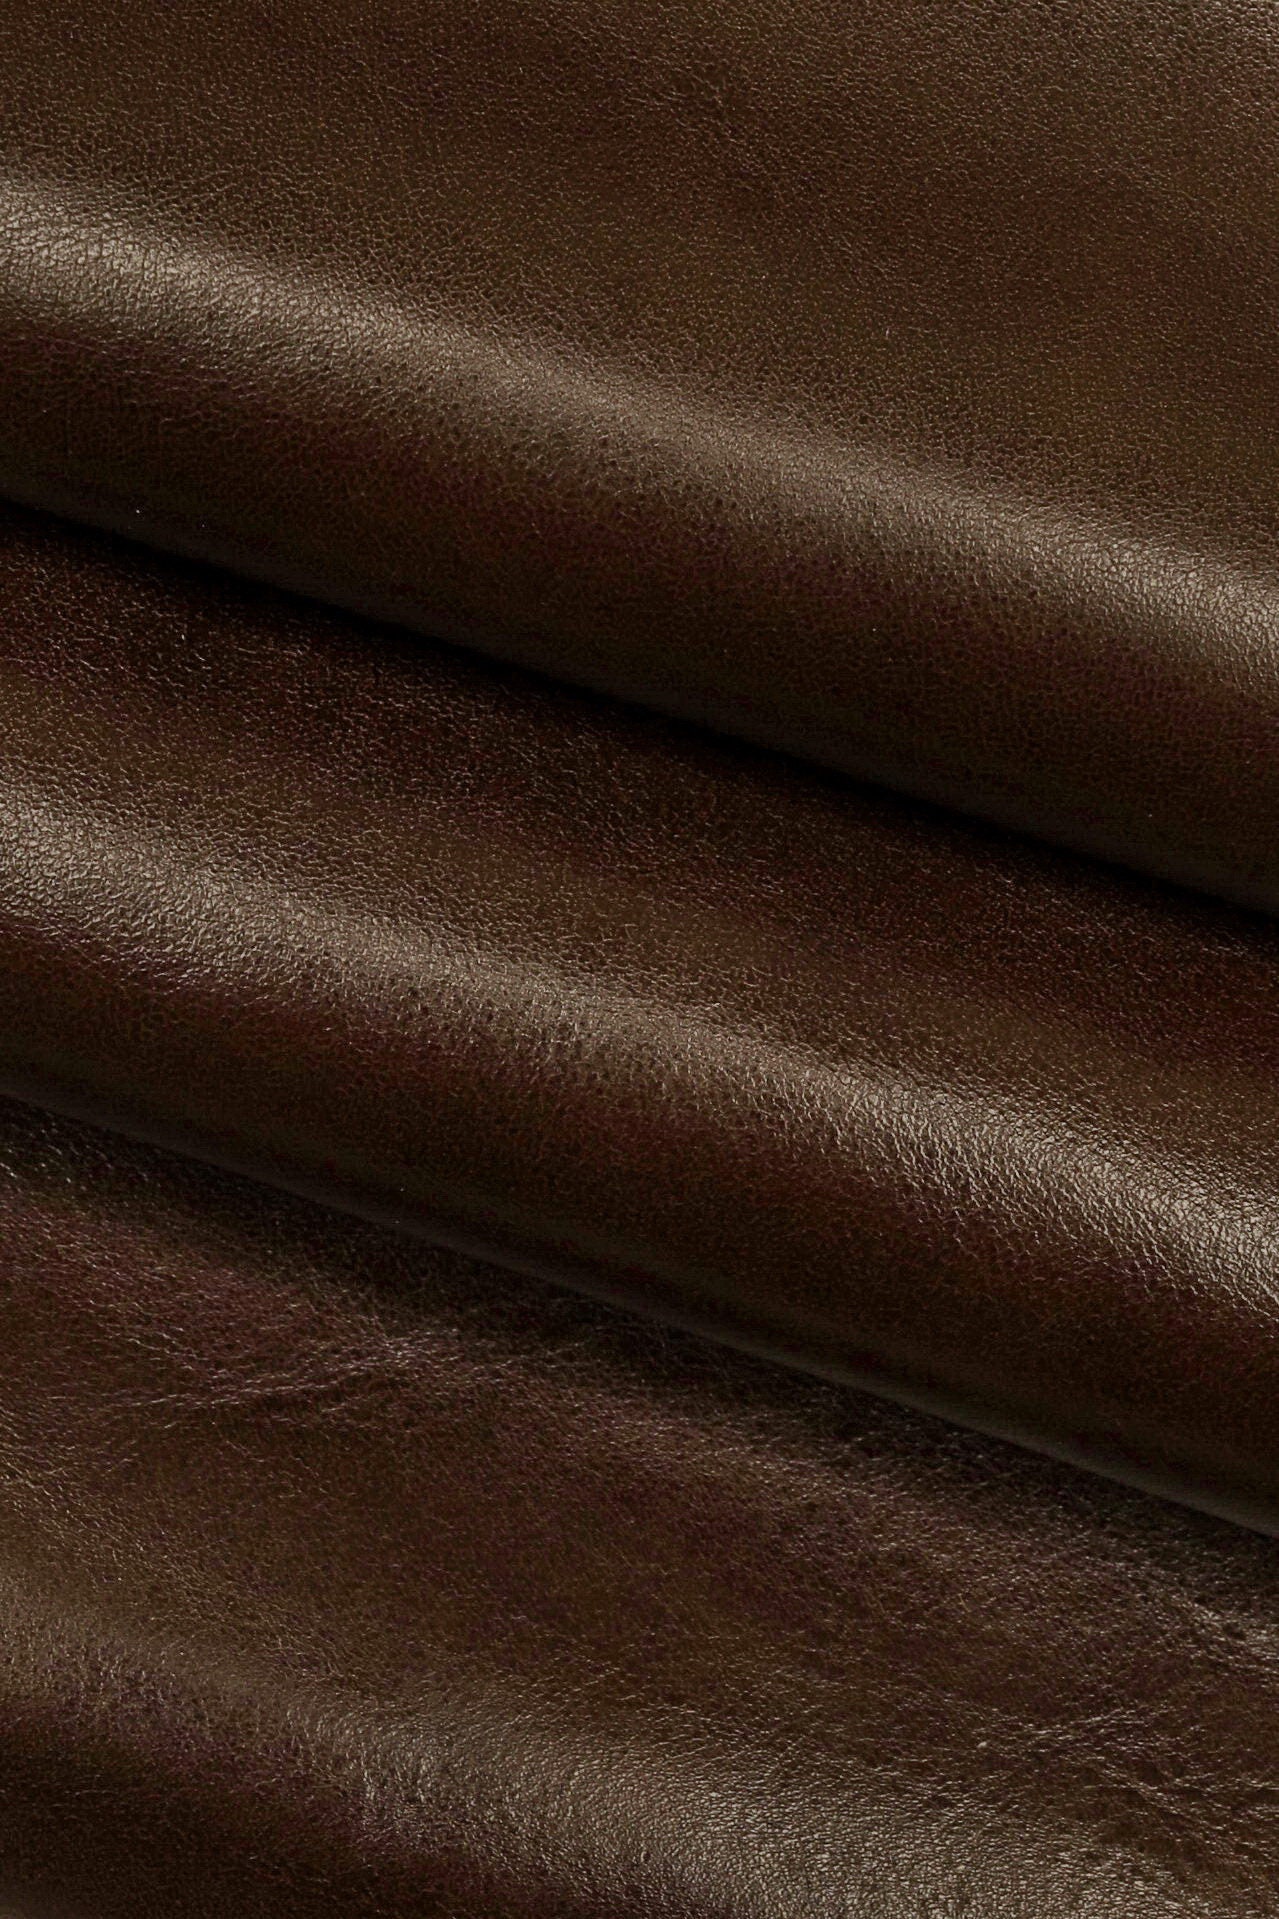 BROWN TAN vegetable tanned leather hide, smooth vintage calfskin, stiff  matt cowhide